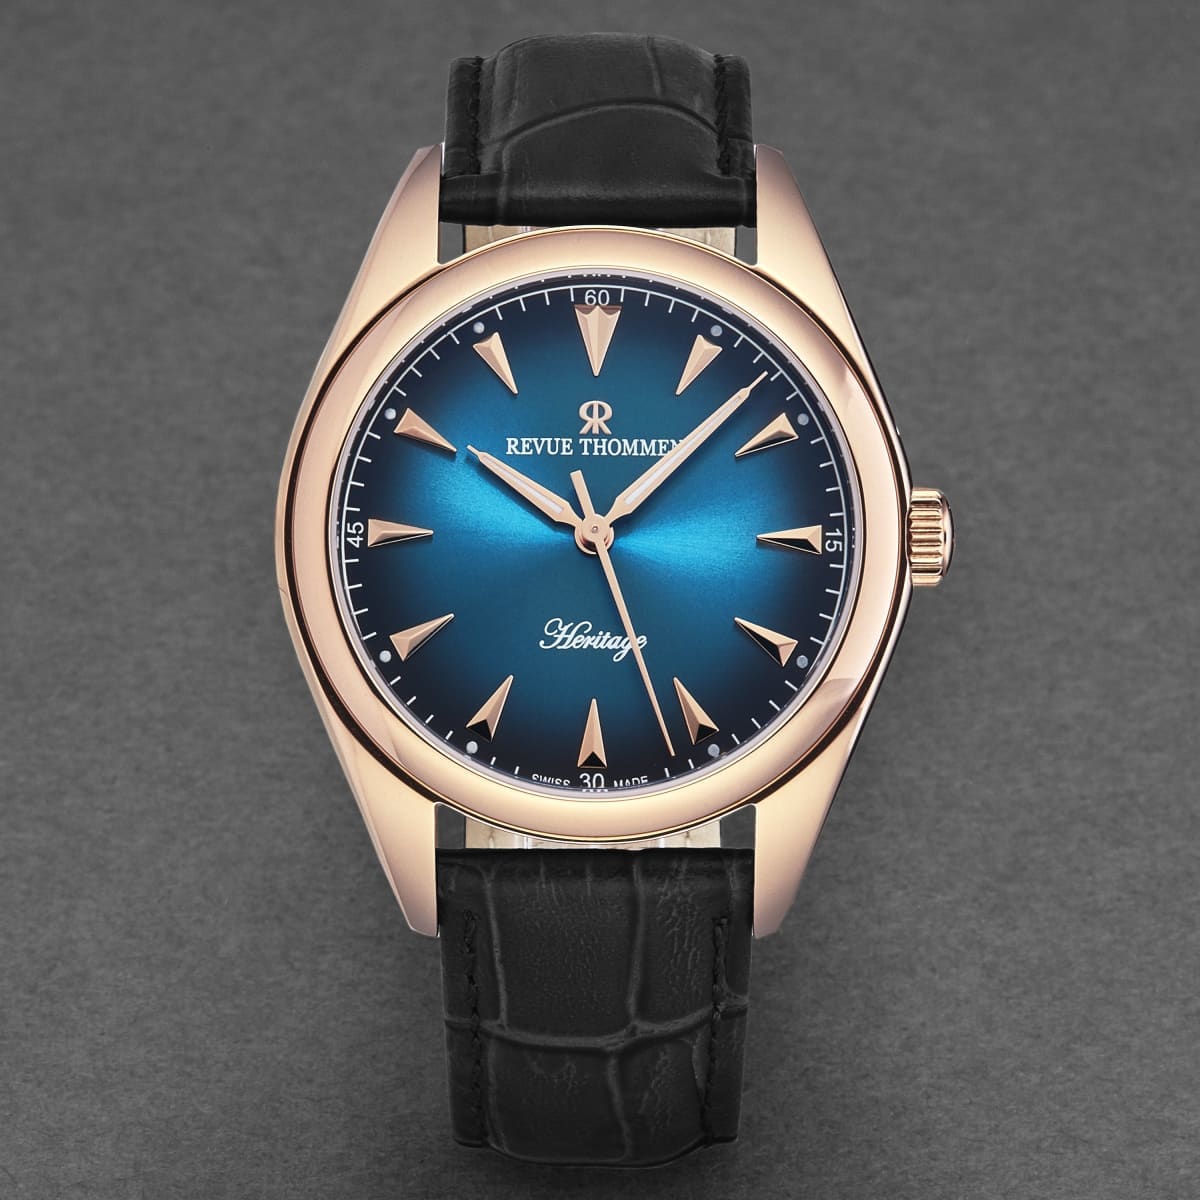 Revue Thommen Men’s ’Heritage’ Blue Dial Black Leather Strap Automatic Watch 21010.2565 - On sale